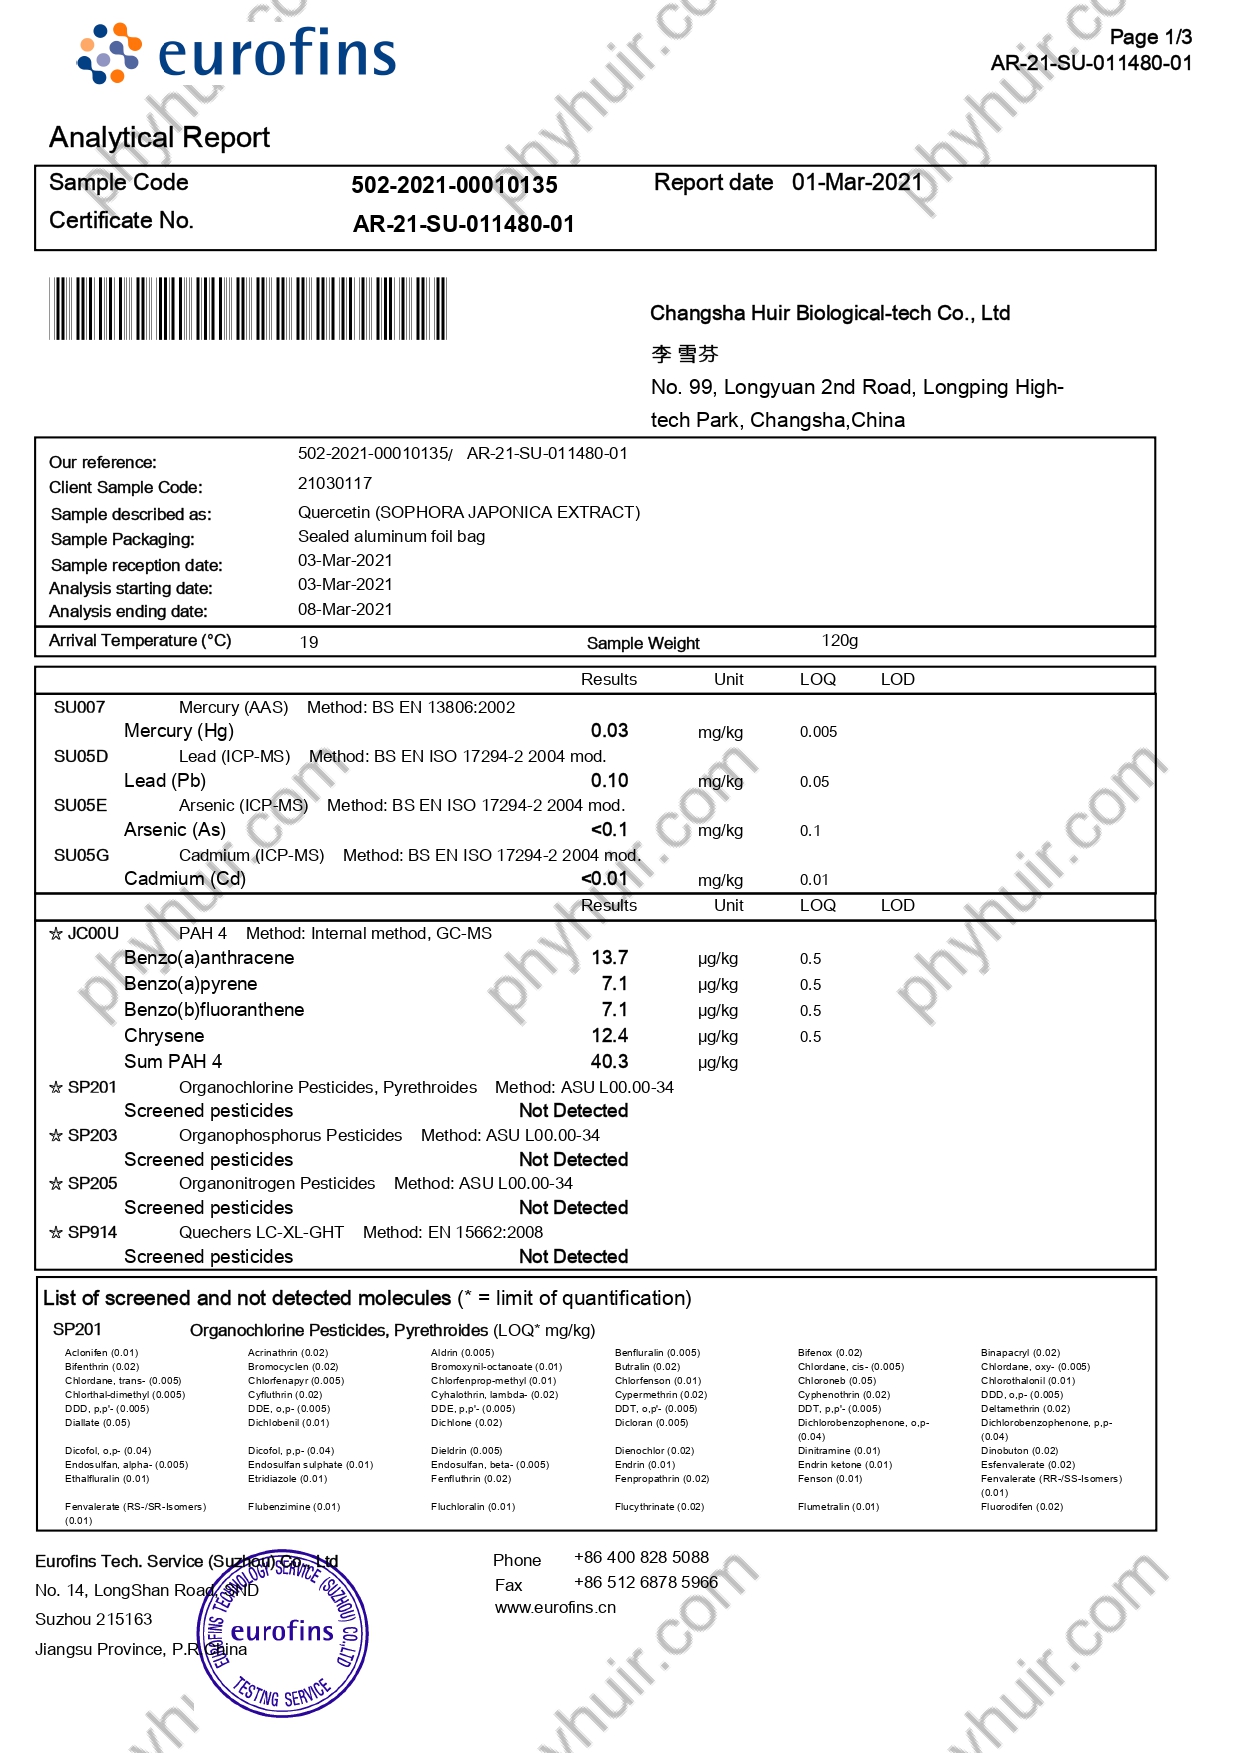 21030117 (AR-21-SU-011480-01) Quercetin PAH, Heavy Metal, Pesticides_watermark_page-0001.jpg